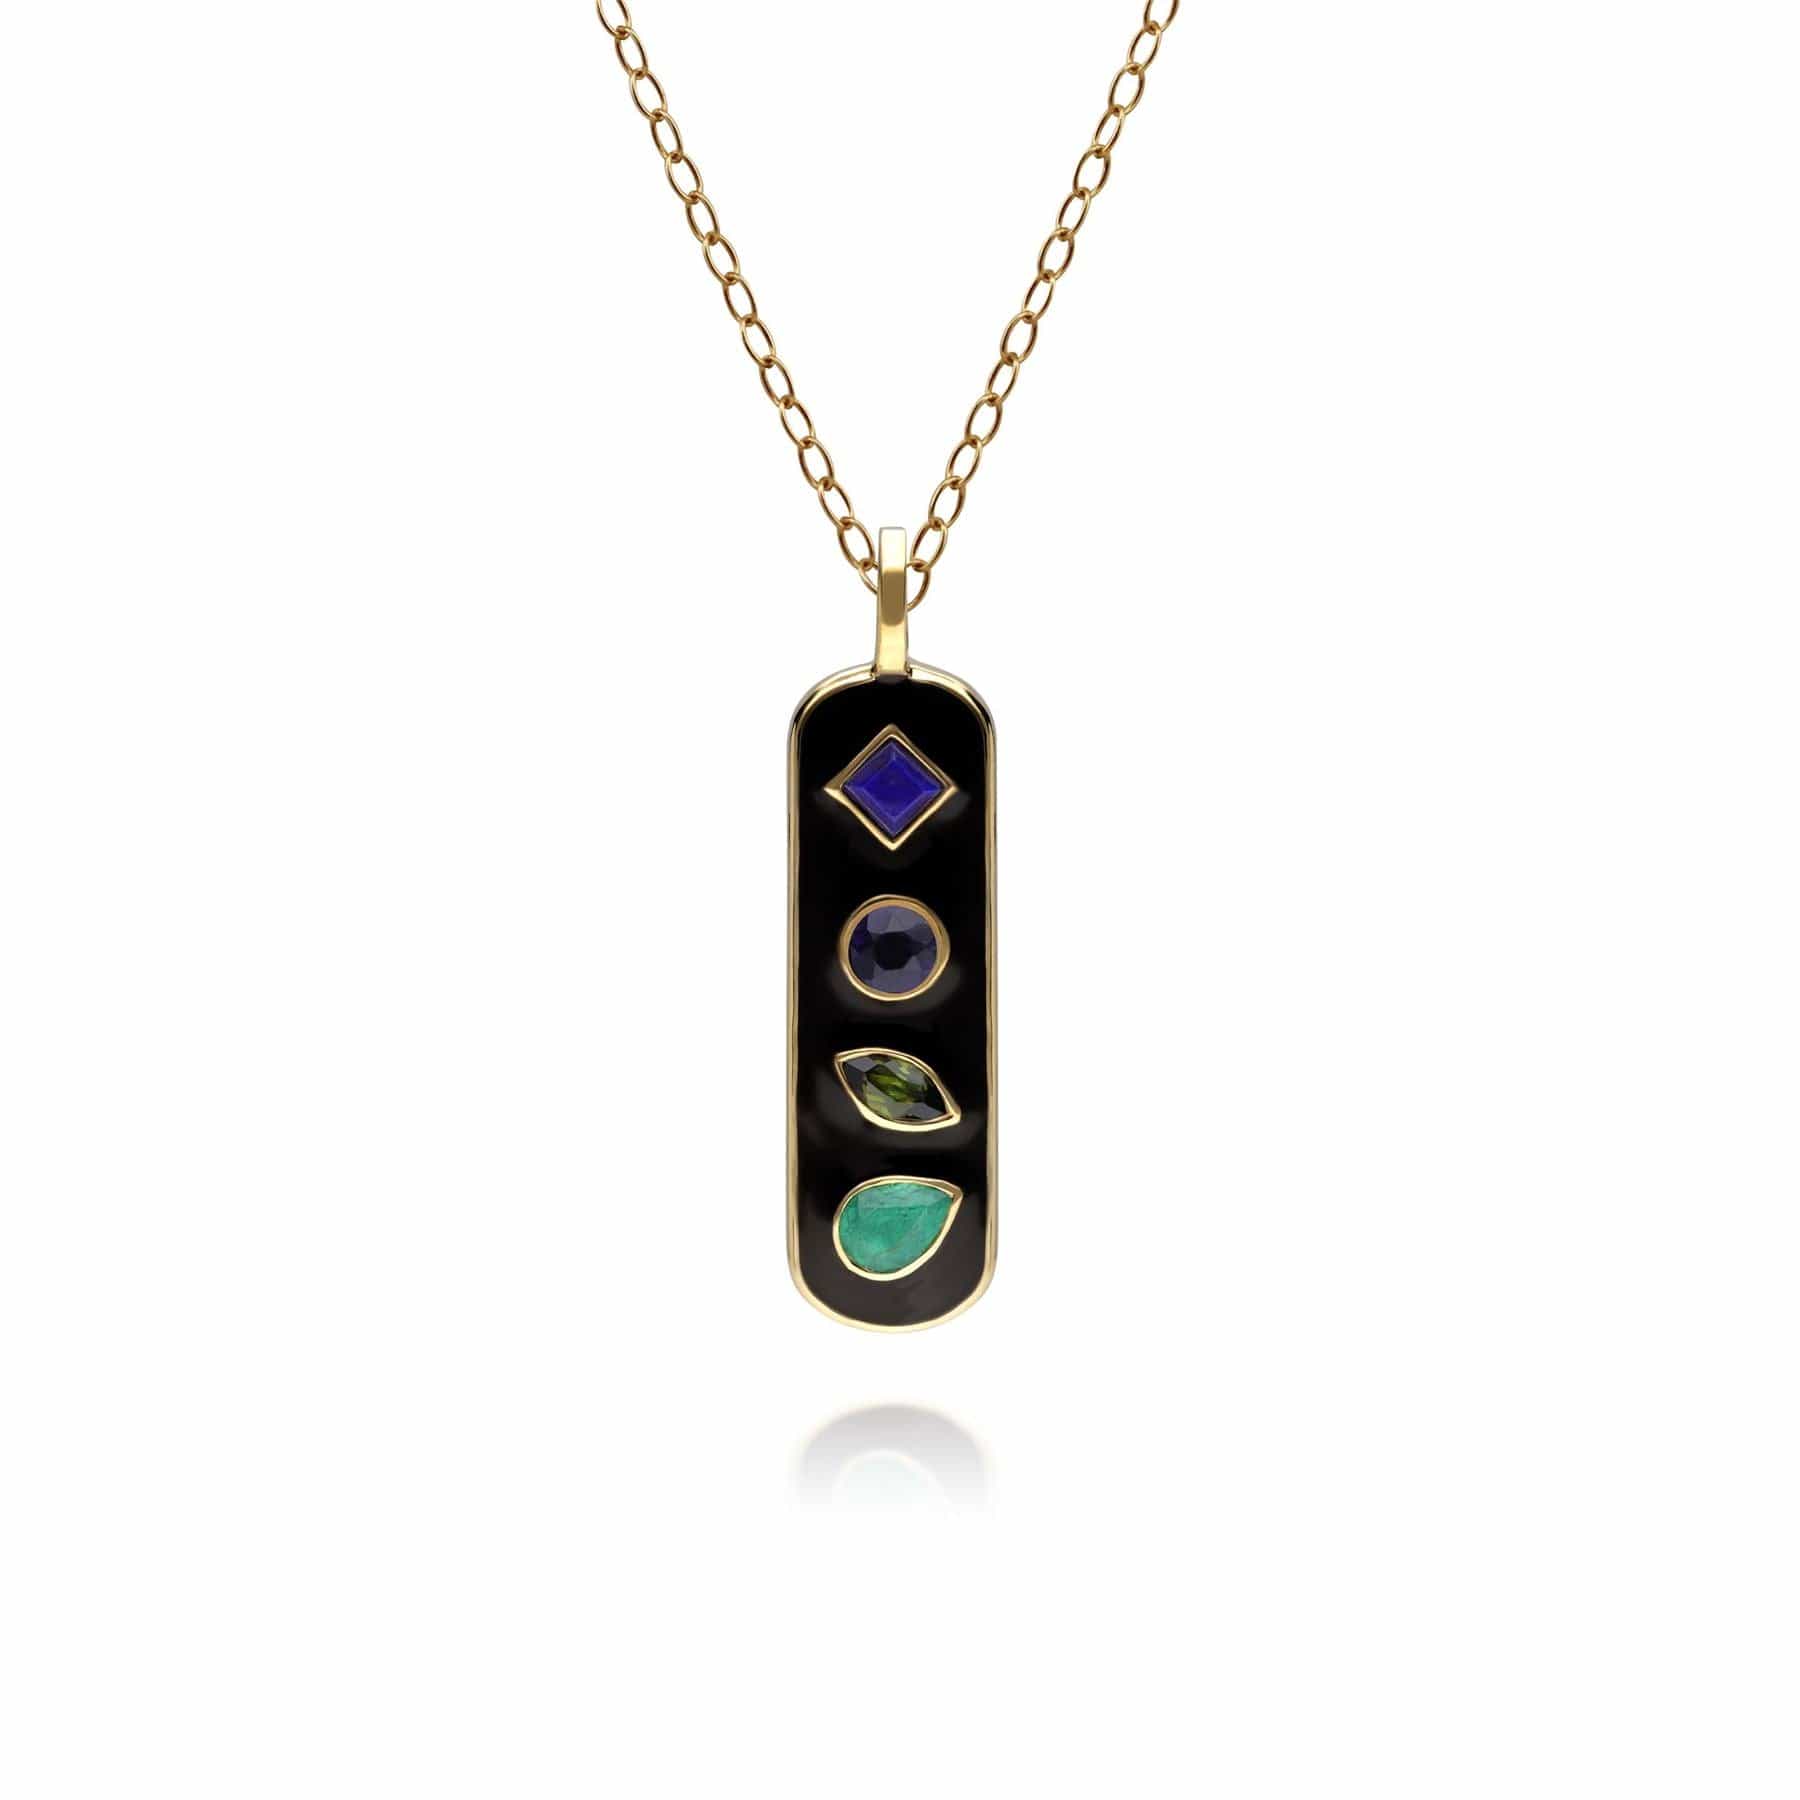 Coded Whispers Black Enamel 'Live' Acrostic Gemstone Pendant Necklace in Sterling Silver - Gemondo